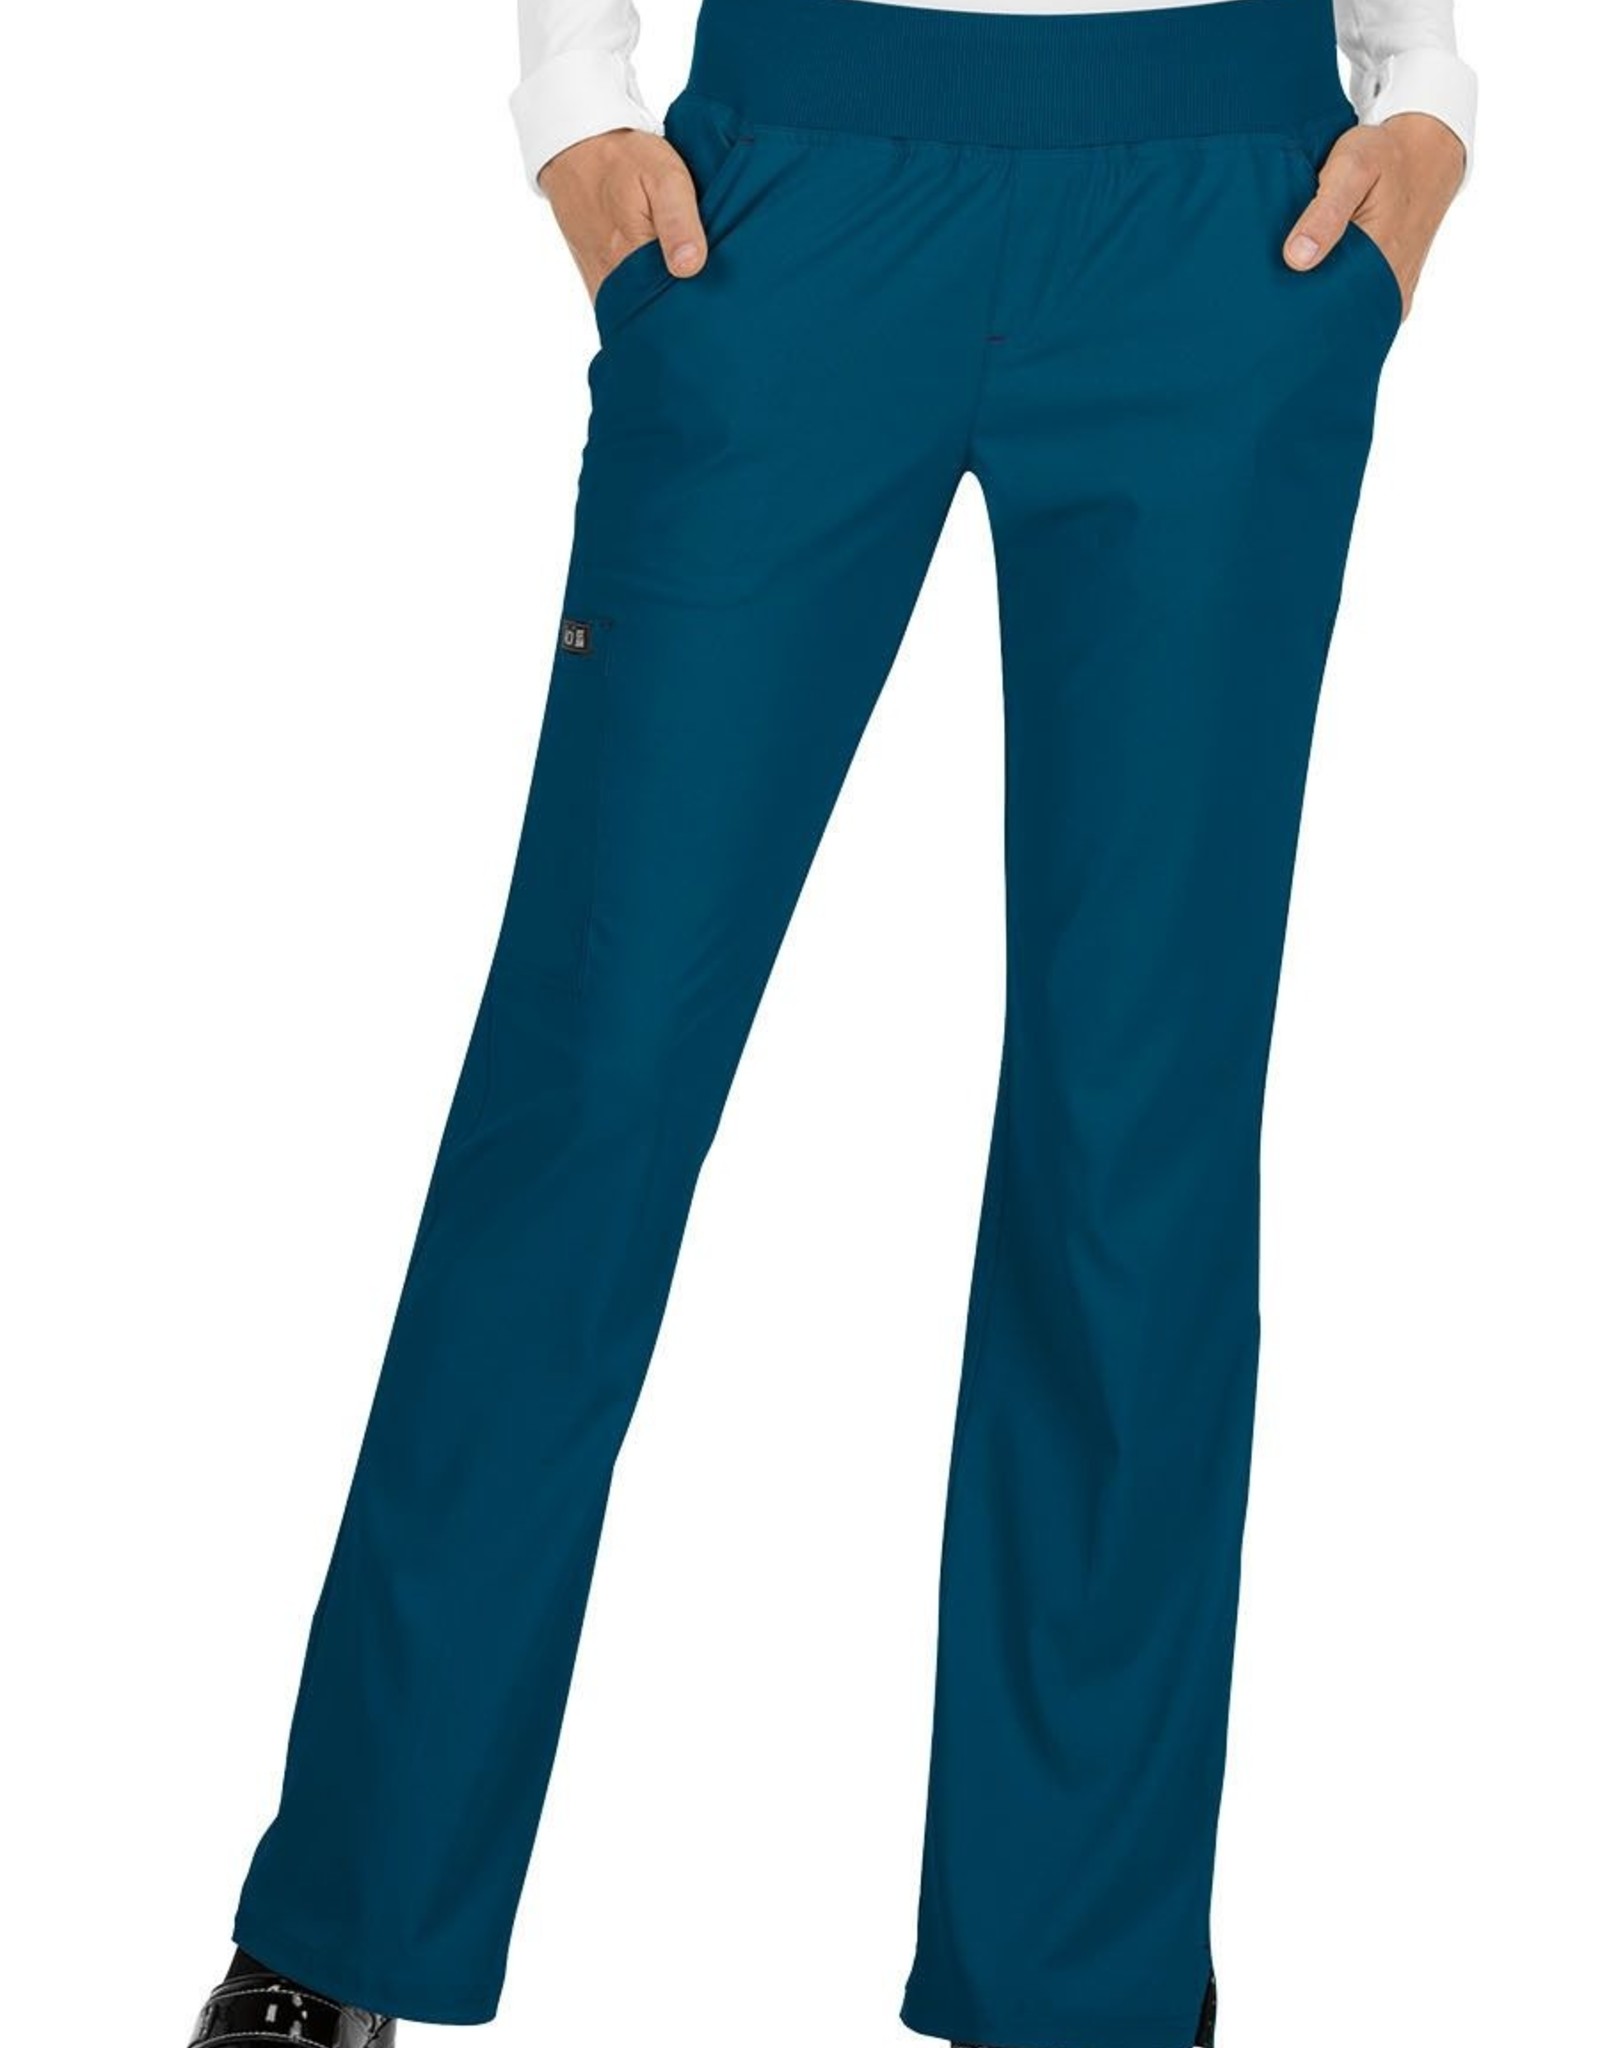 Basics Women's "Laurie" Pants (Tall)